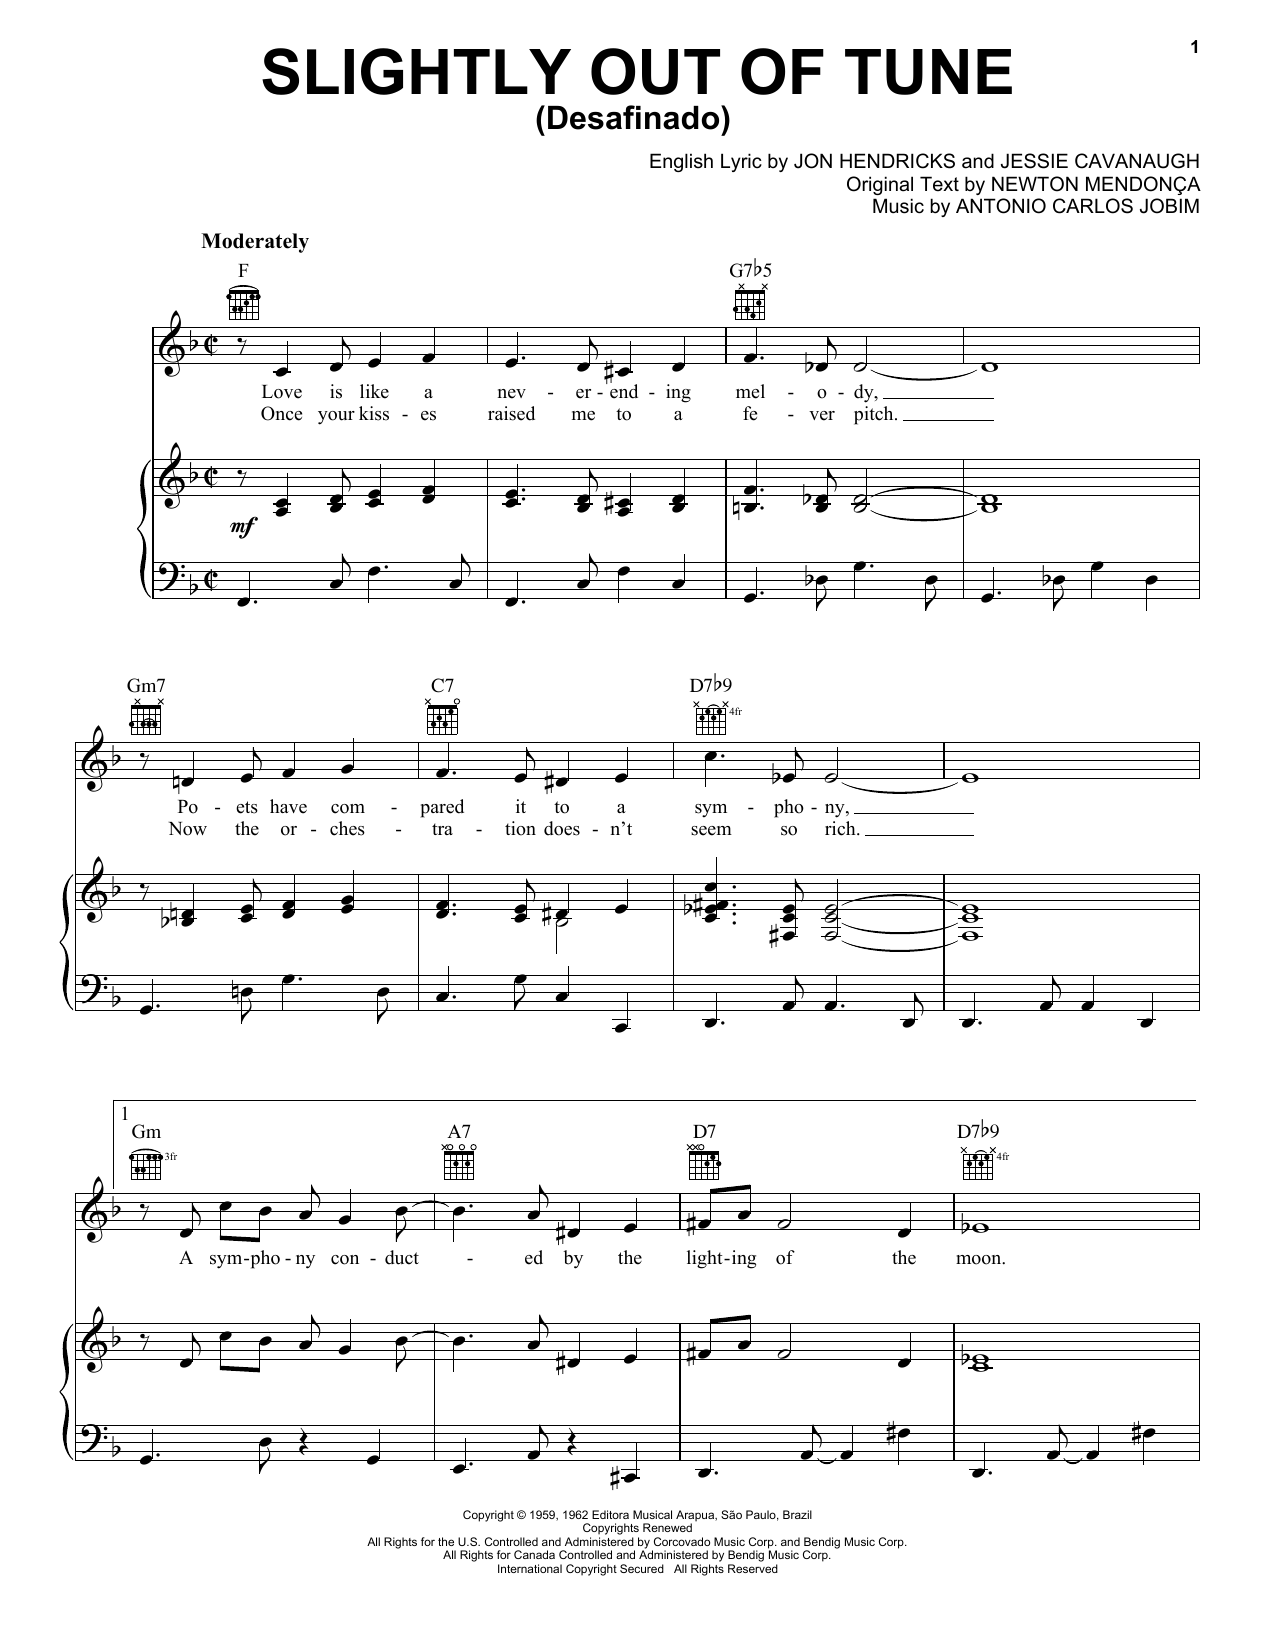 Antonio Carlos Jobim Slightly Out Of Tune (Desafinado) Sheet Music Notes & Chords for Melody Line, Lyrics & Chords - Download or Print PDF